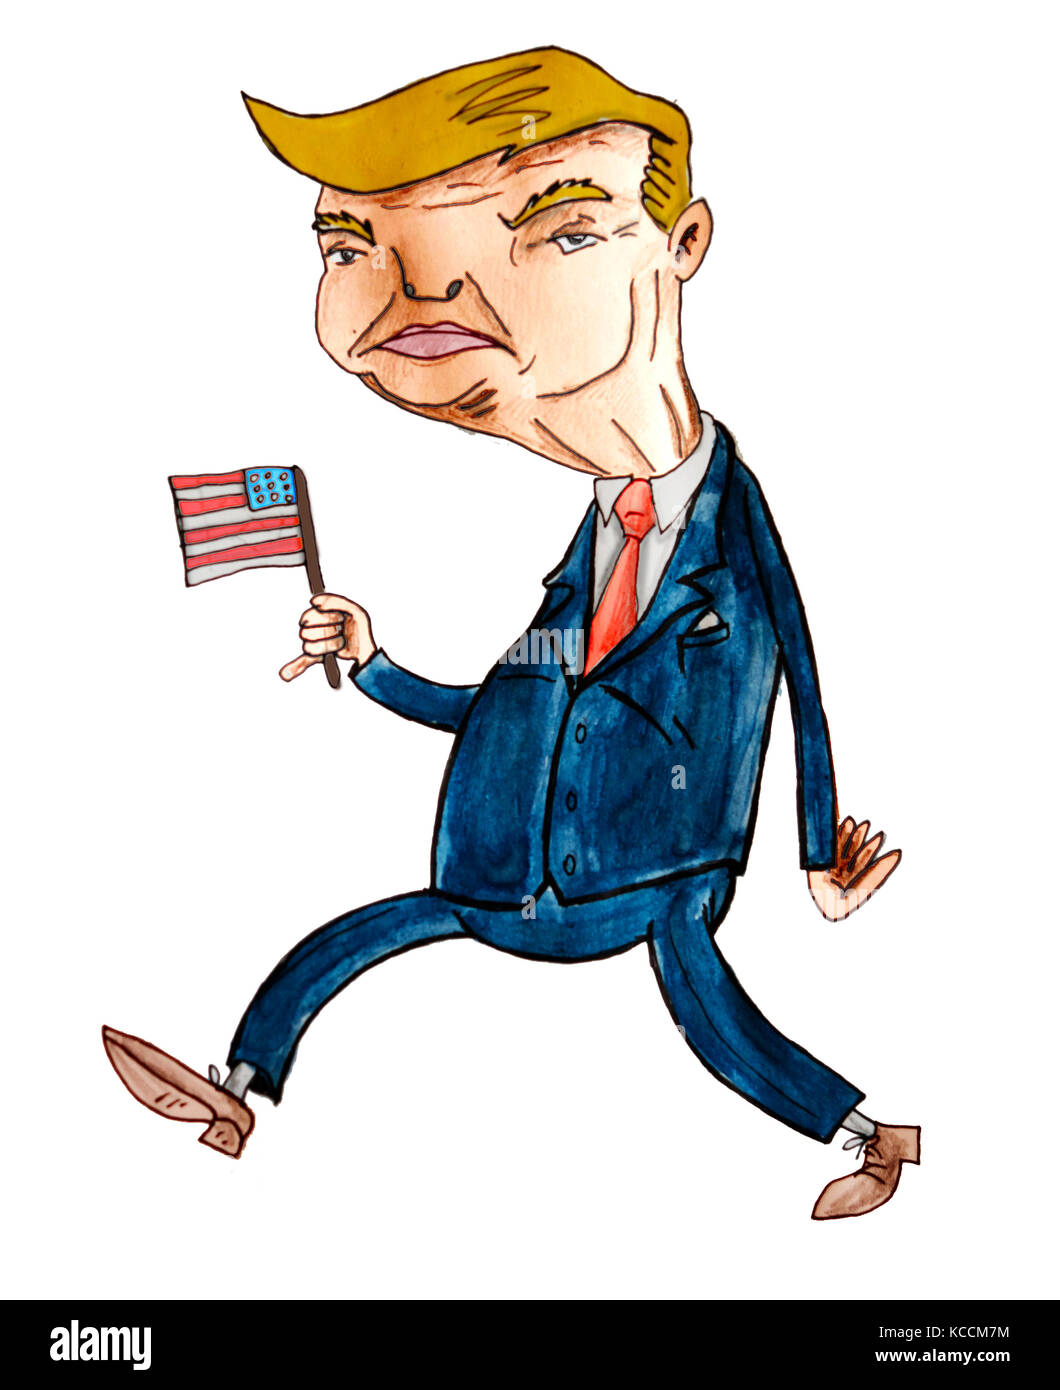 Donald Trump American Presodent charicature cartoon Stock Photo